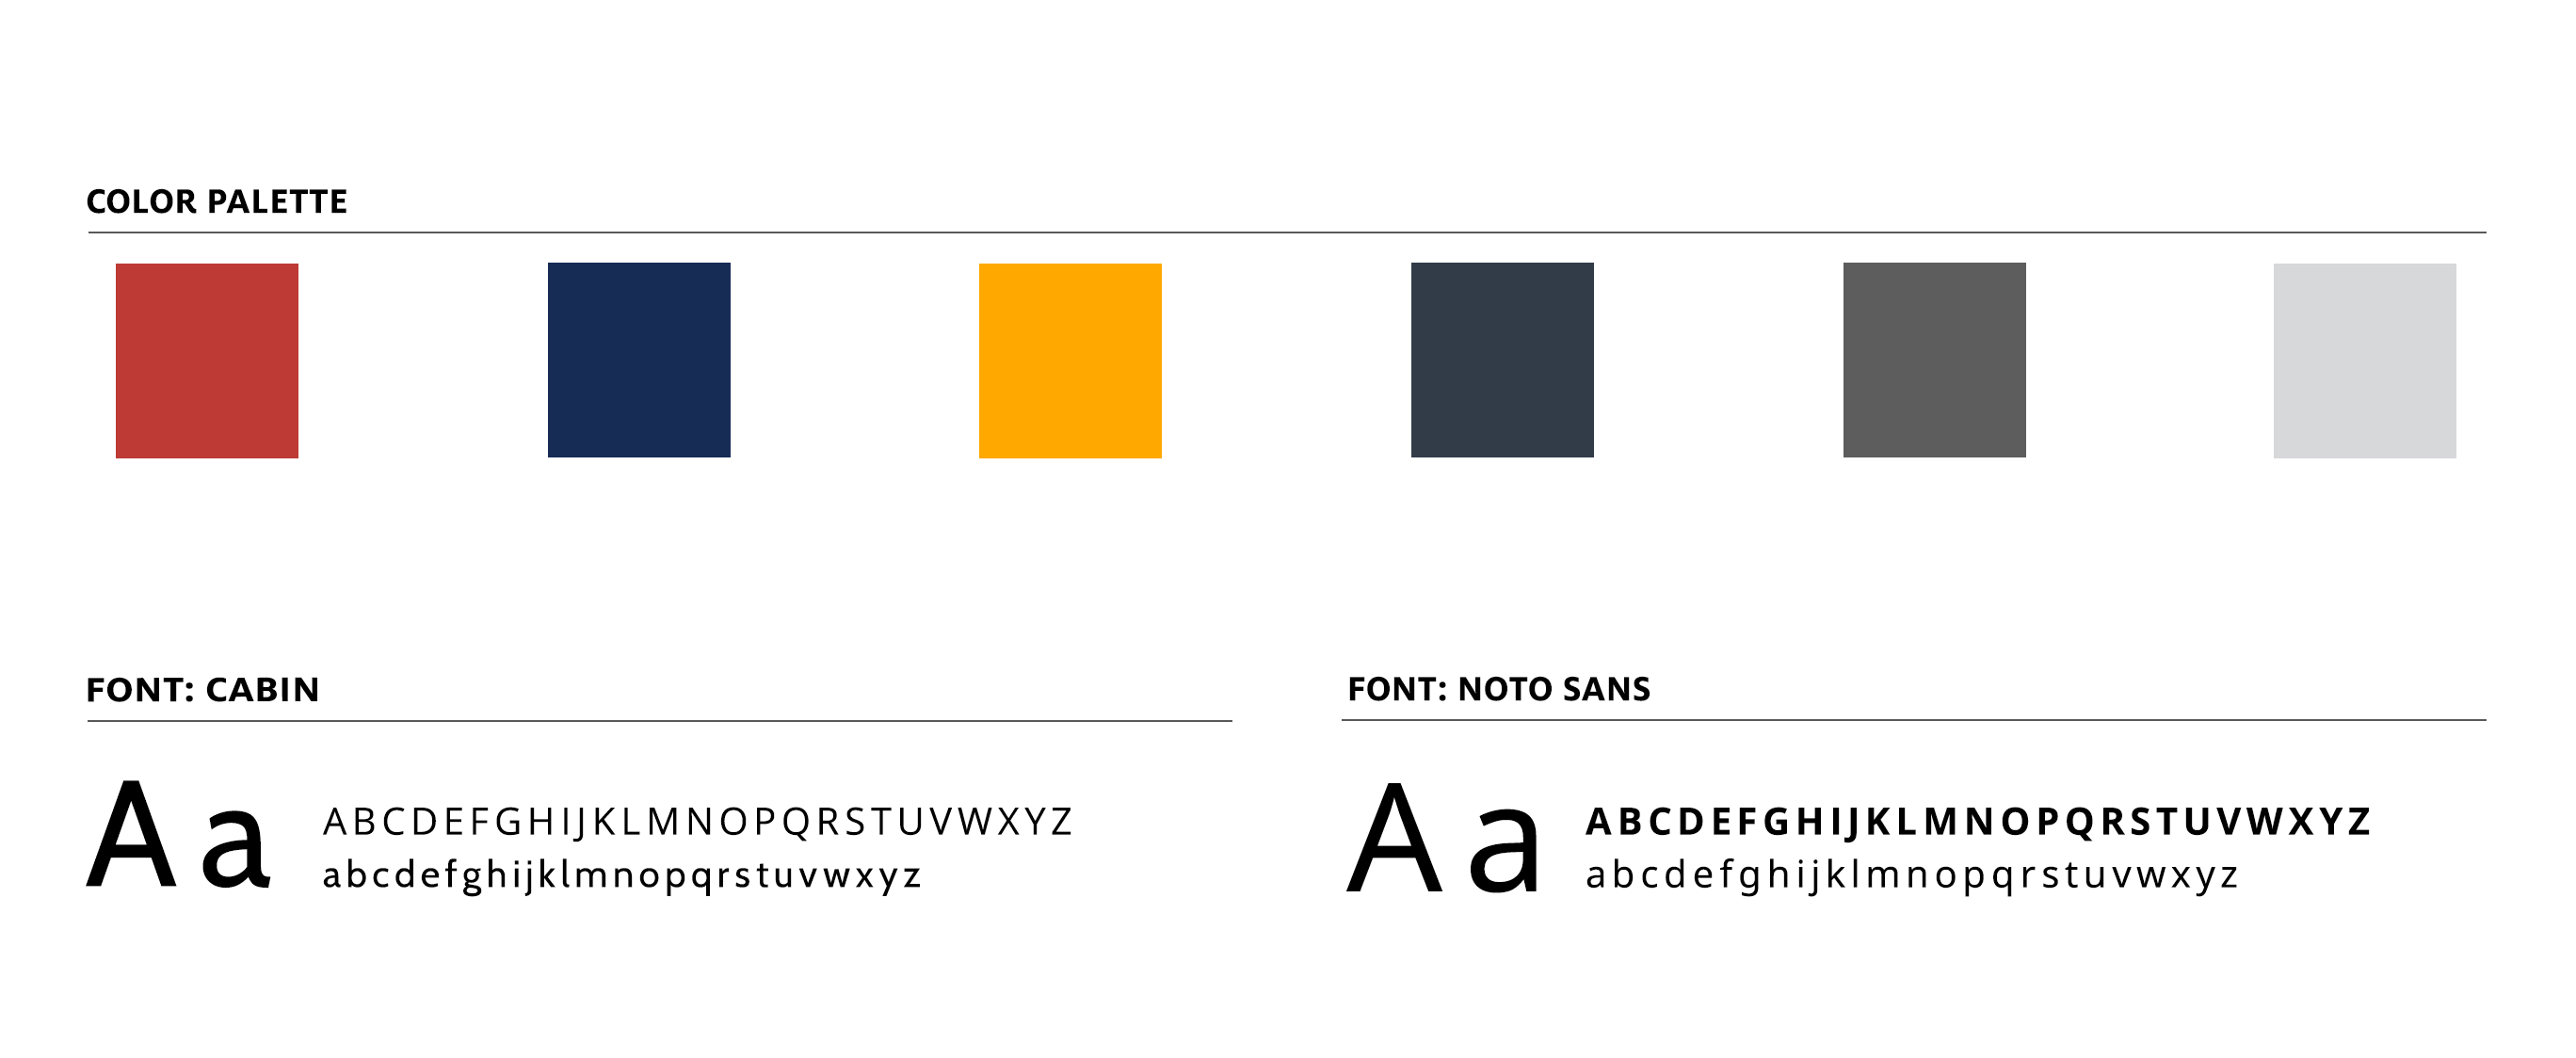 Hertz color palette and fonts